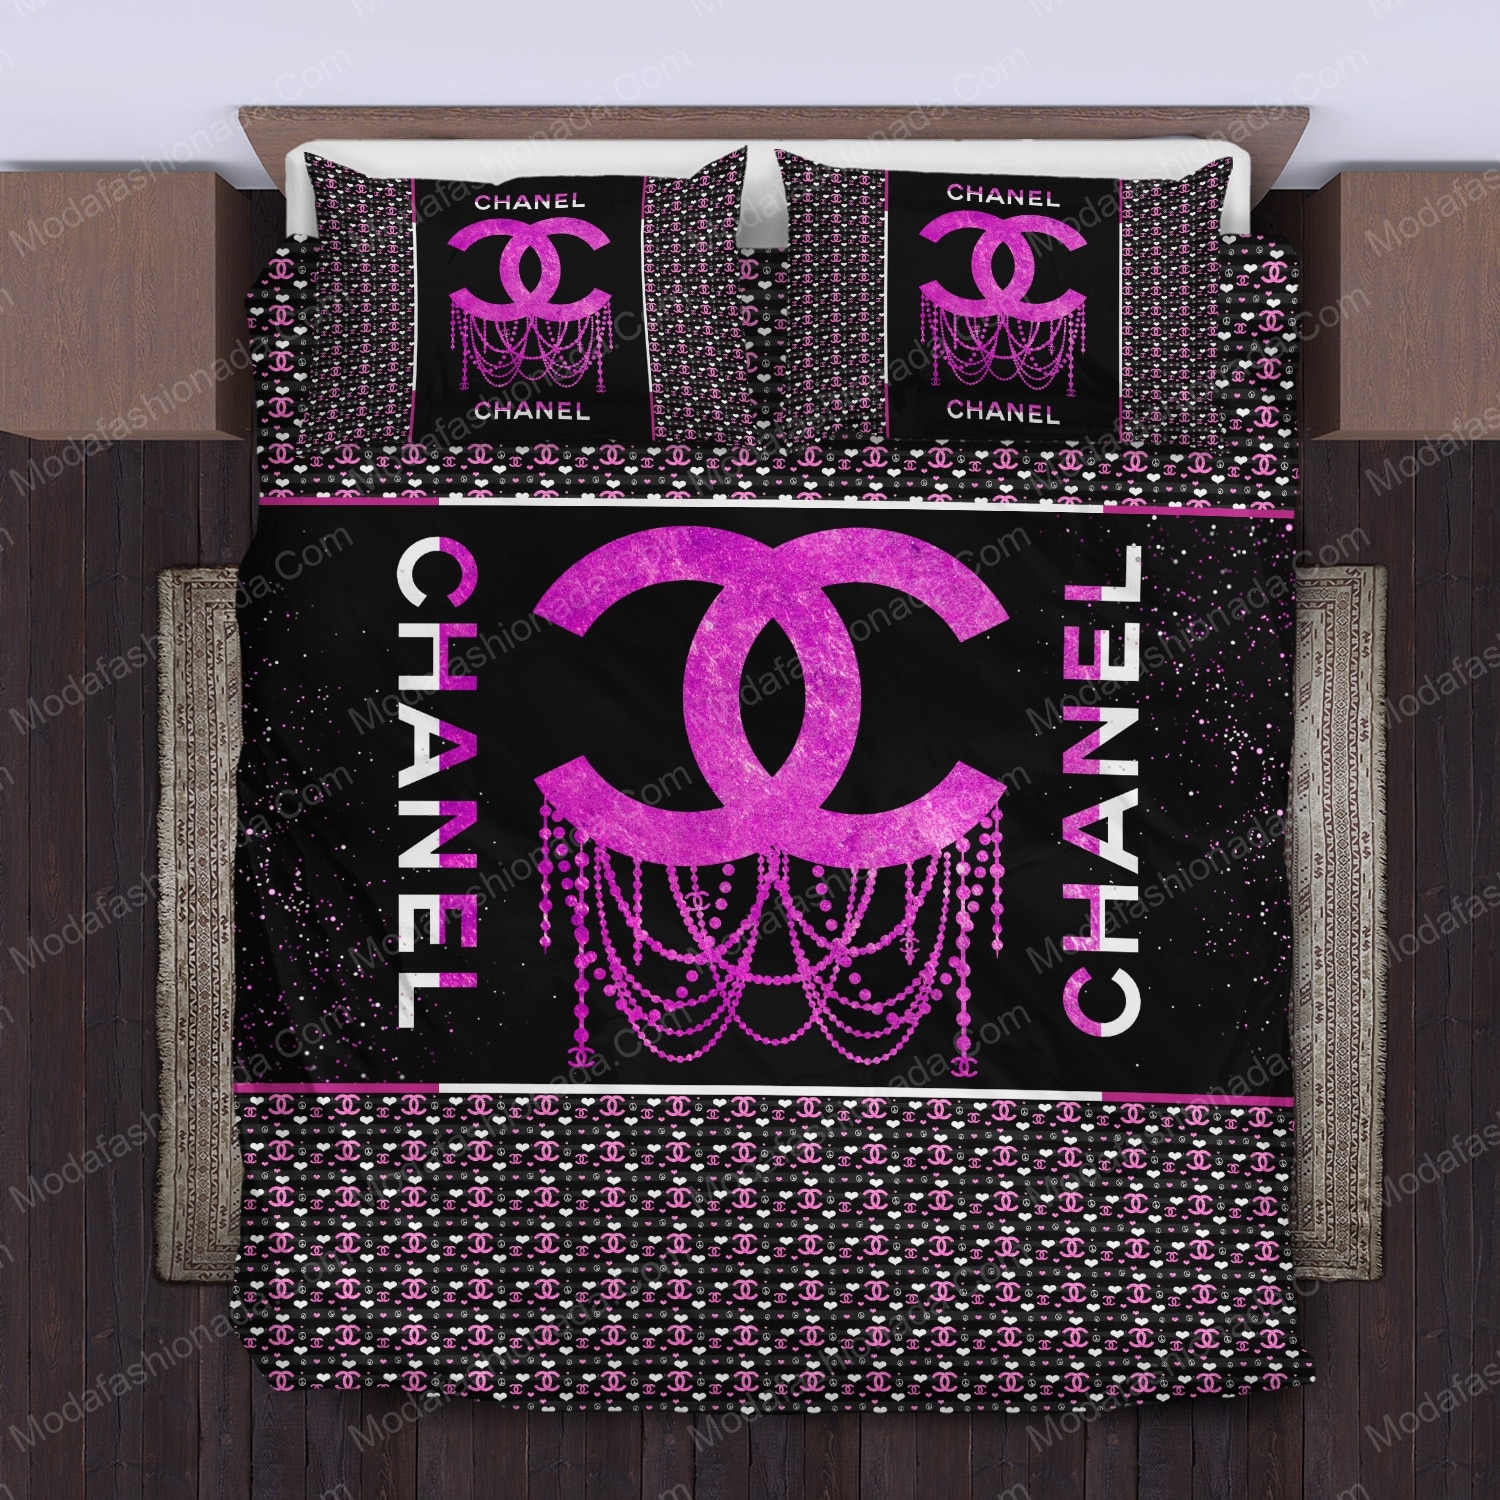 Coco Chanel Bedding Sets - Behindgift